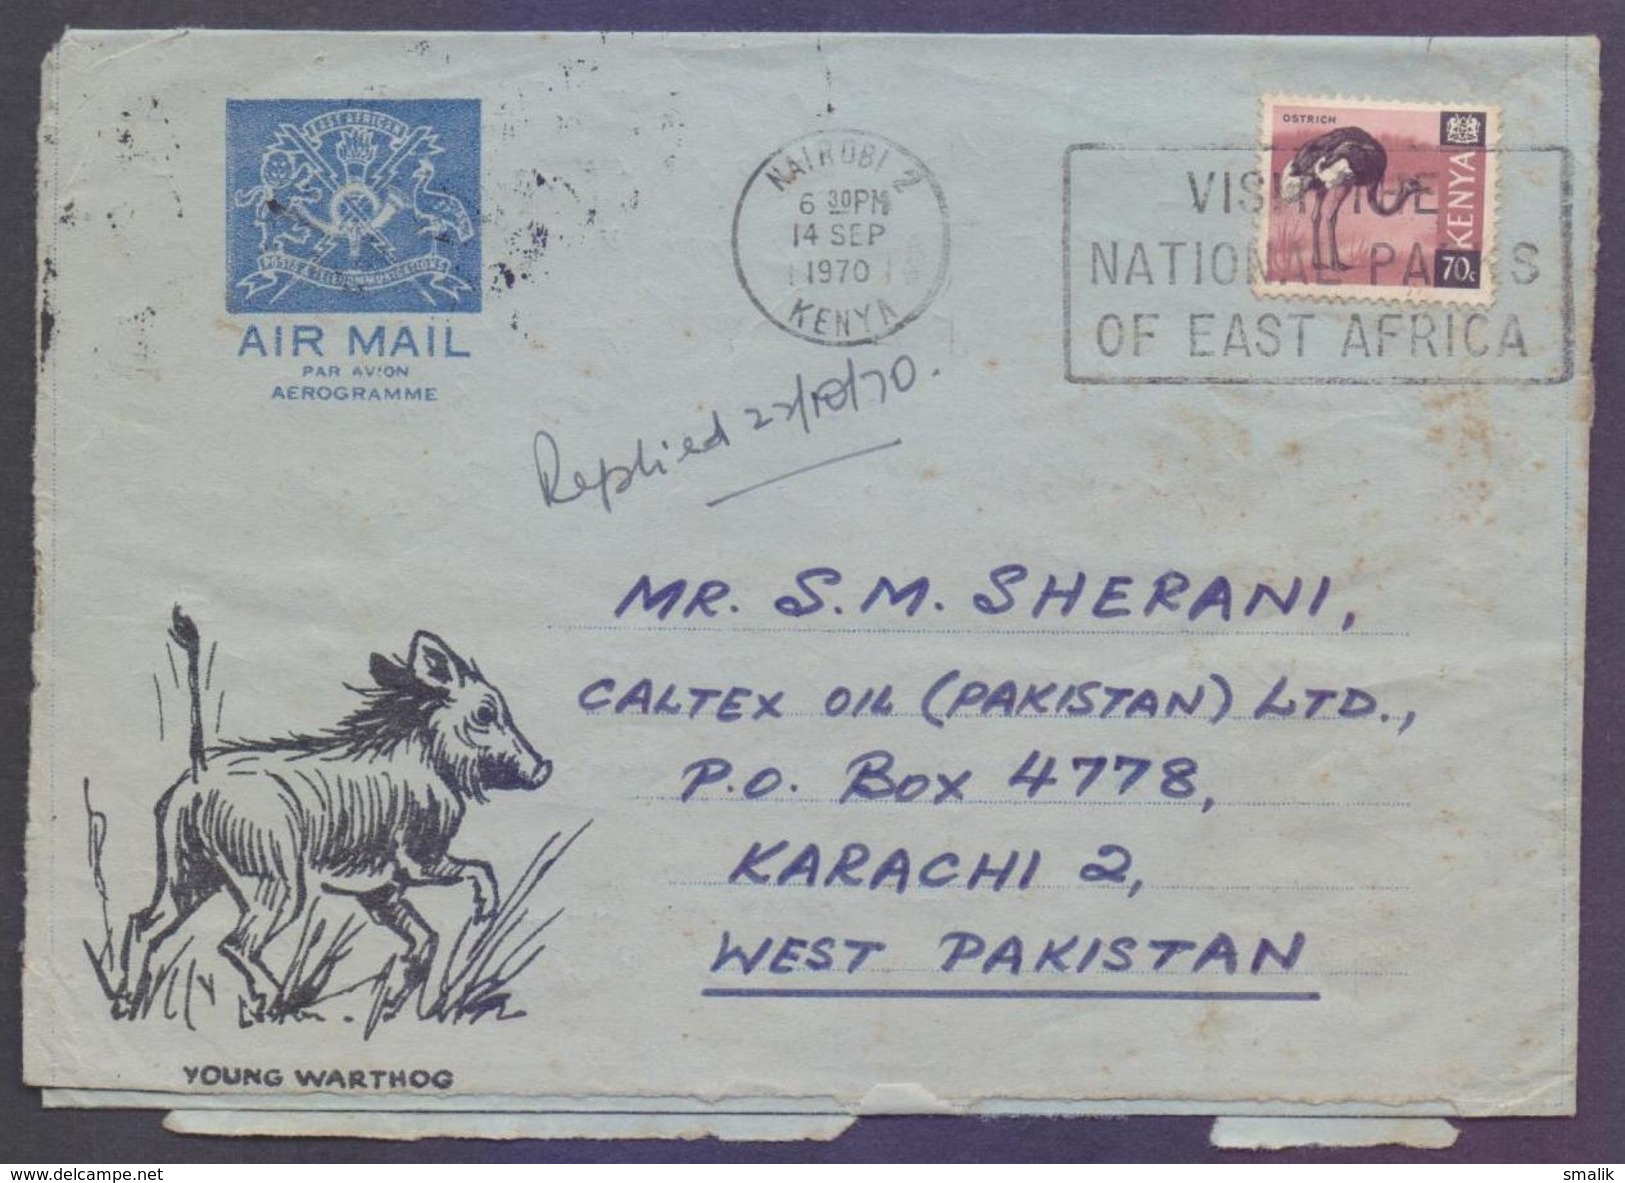 Birds, Postal History Cover, Aerogramme From KENYA, Used 1970 With Slogan Postmark - Kenya (1963-...)